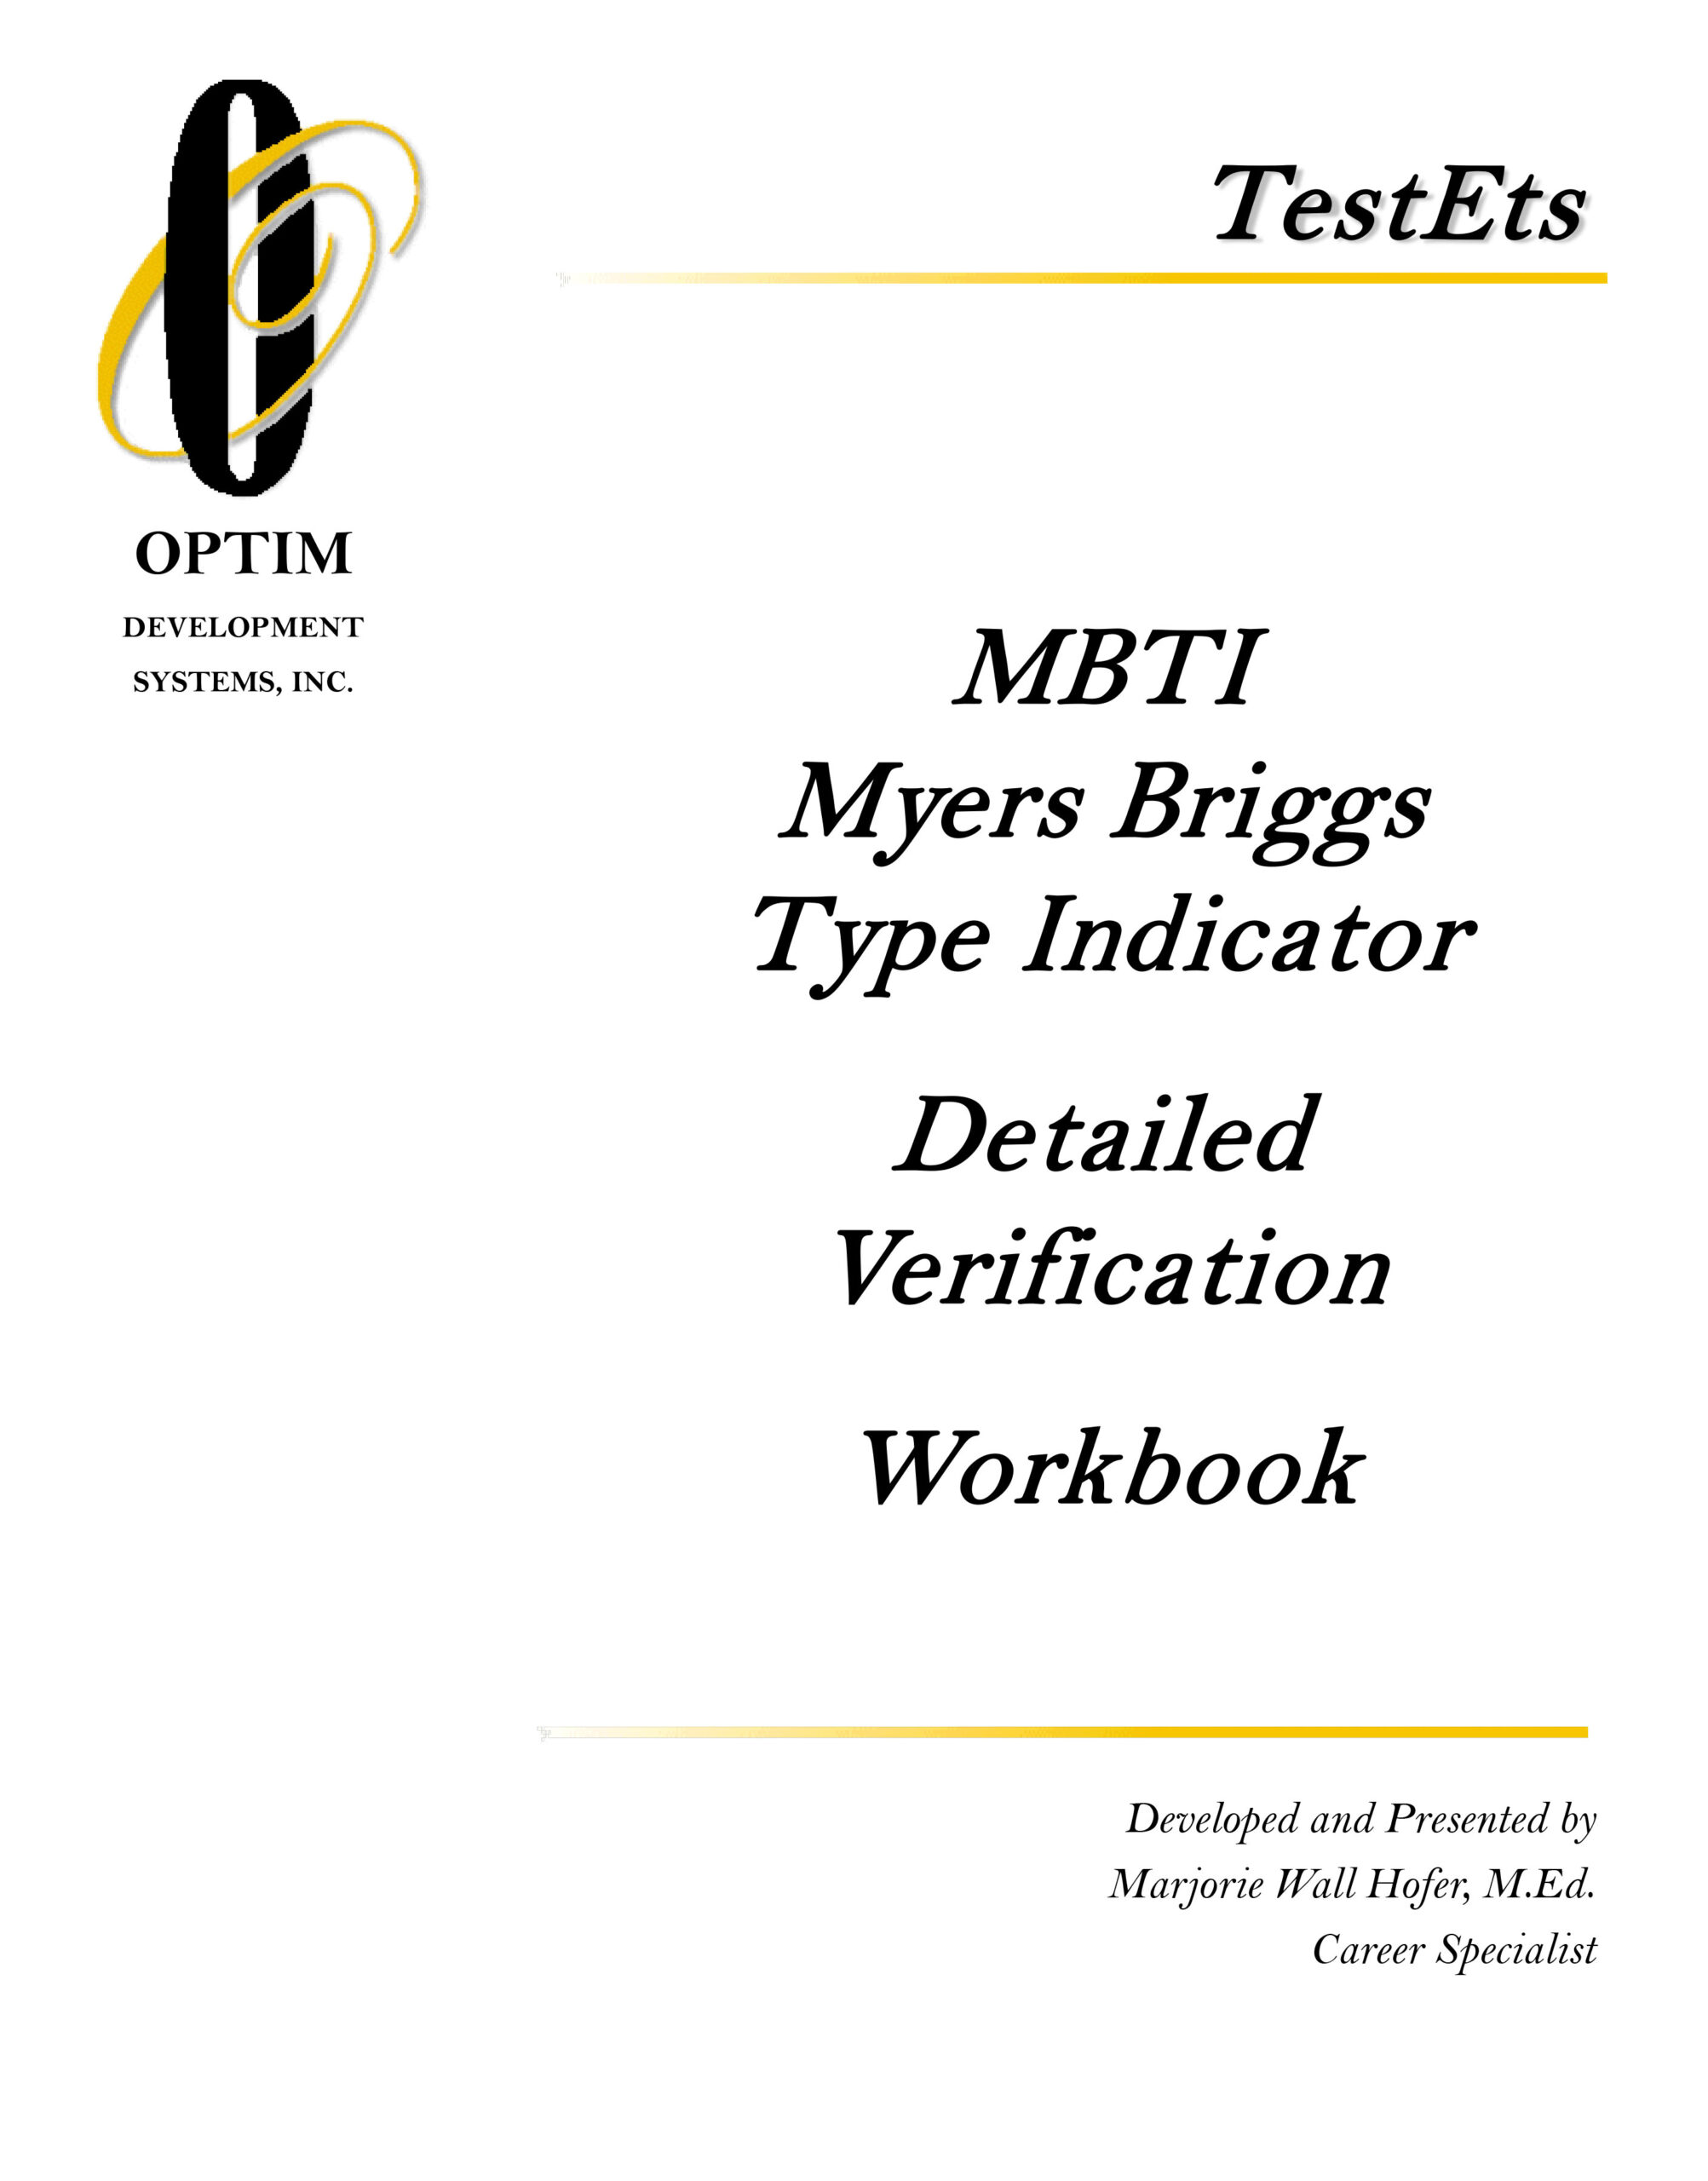 MBTI Verification Workbook